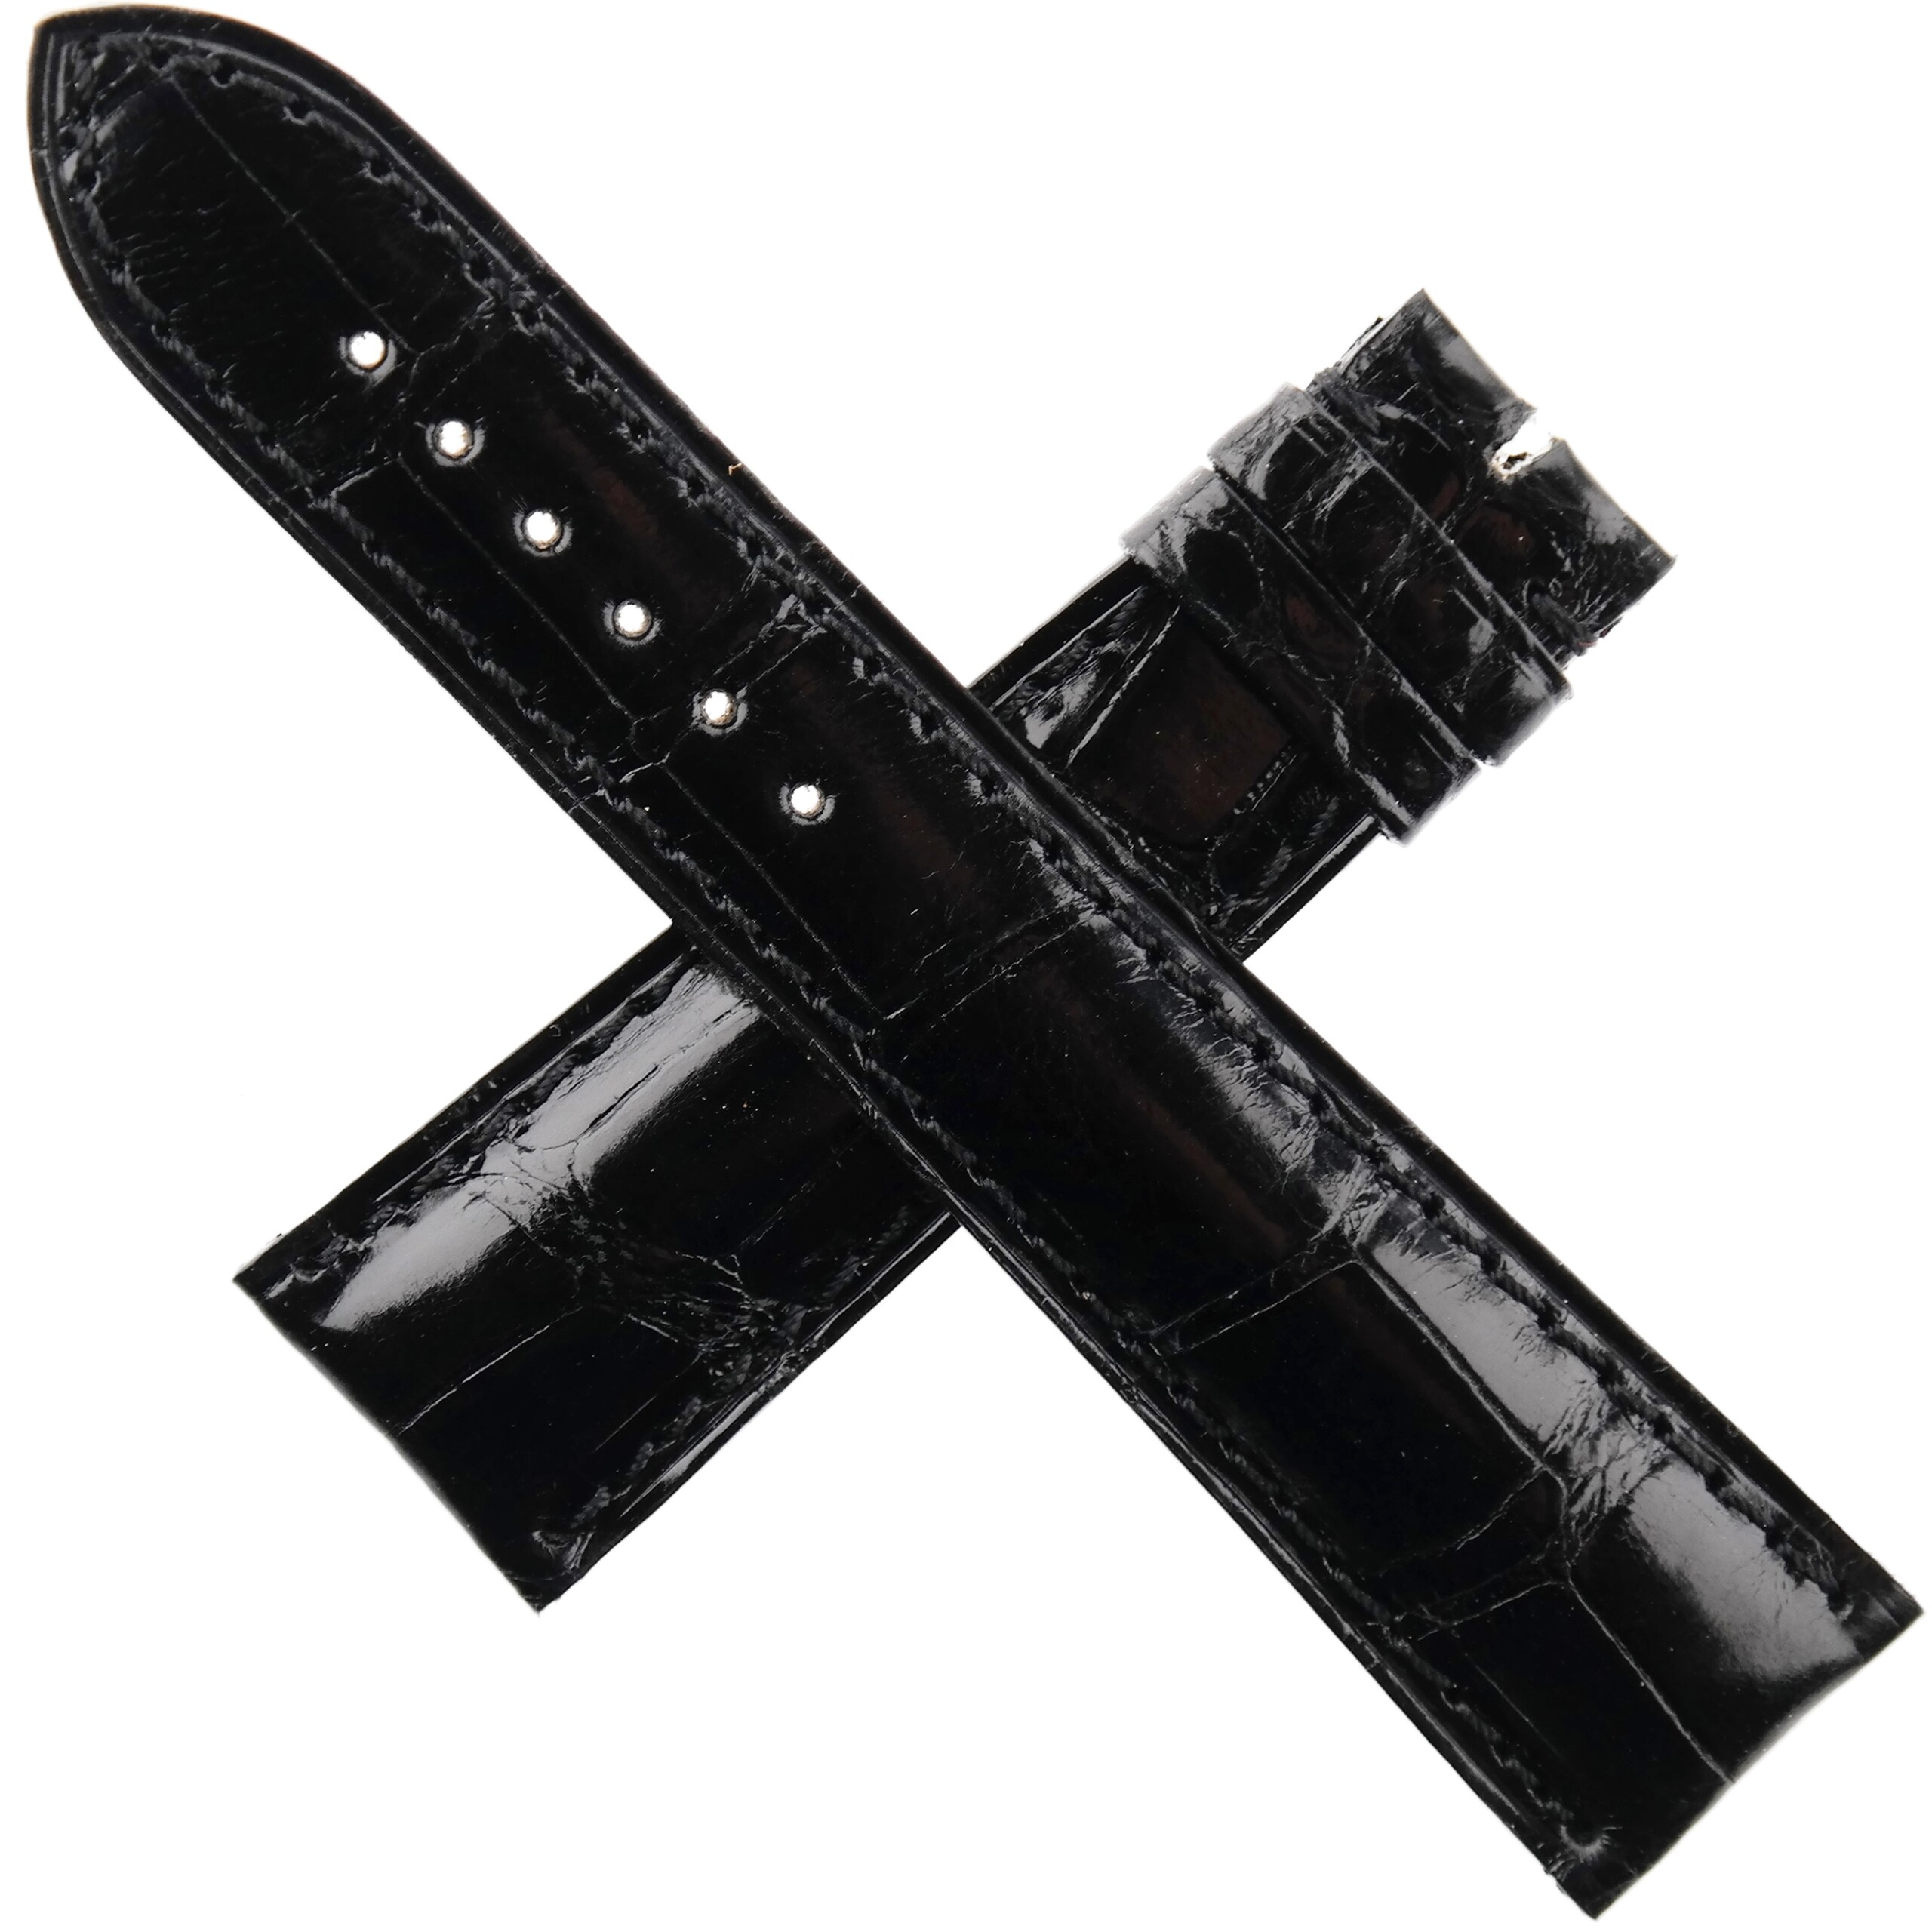 CUERVO Y SOBRINOS - Luxury Watch Strap - 22/18 - 120/75 - Lacquered Leather